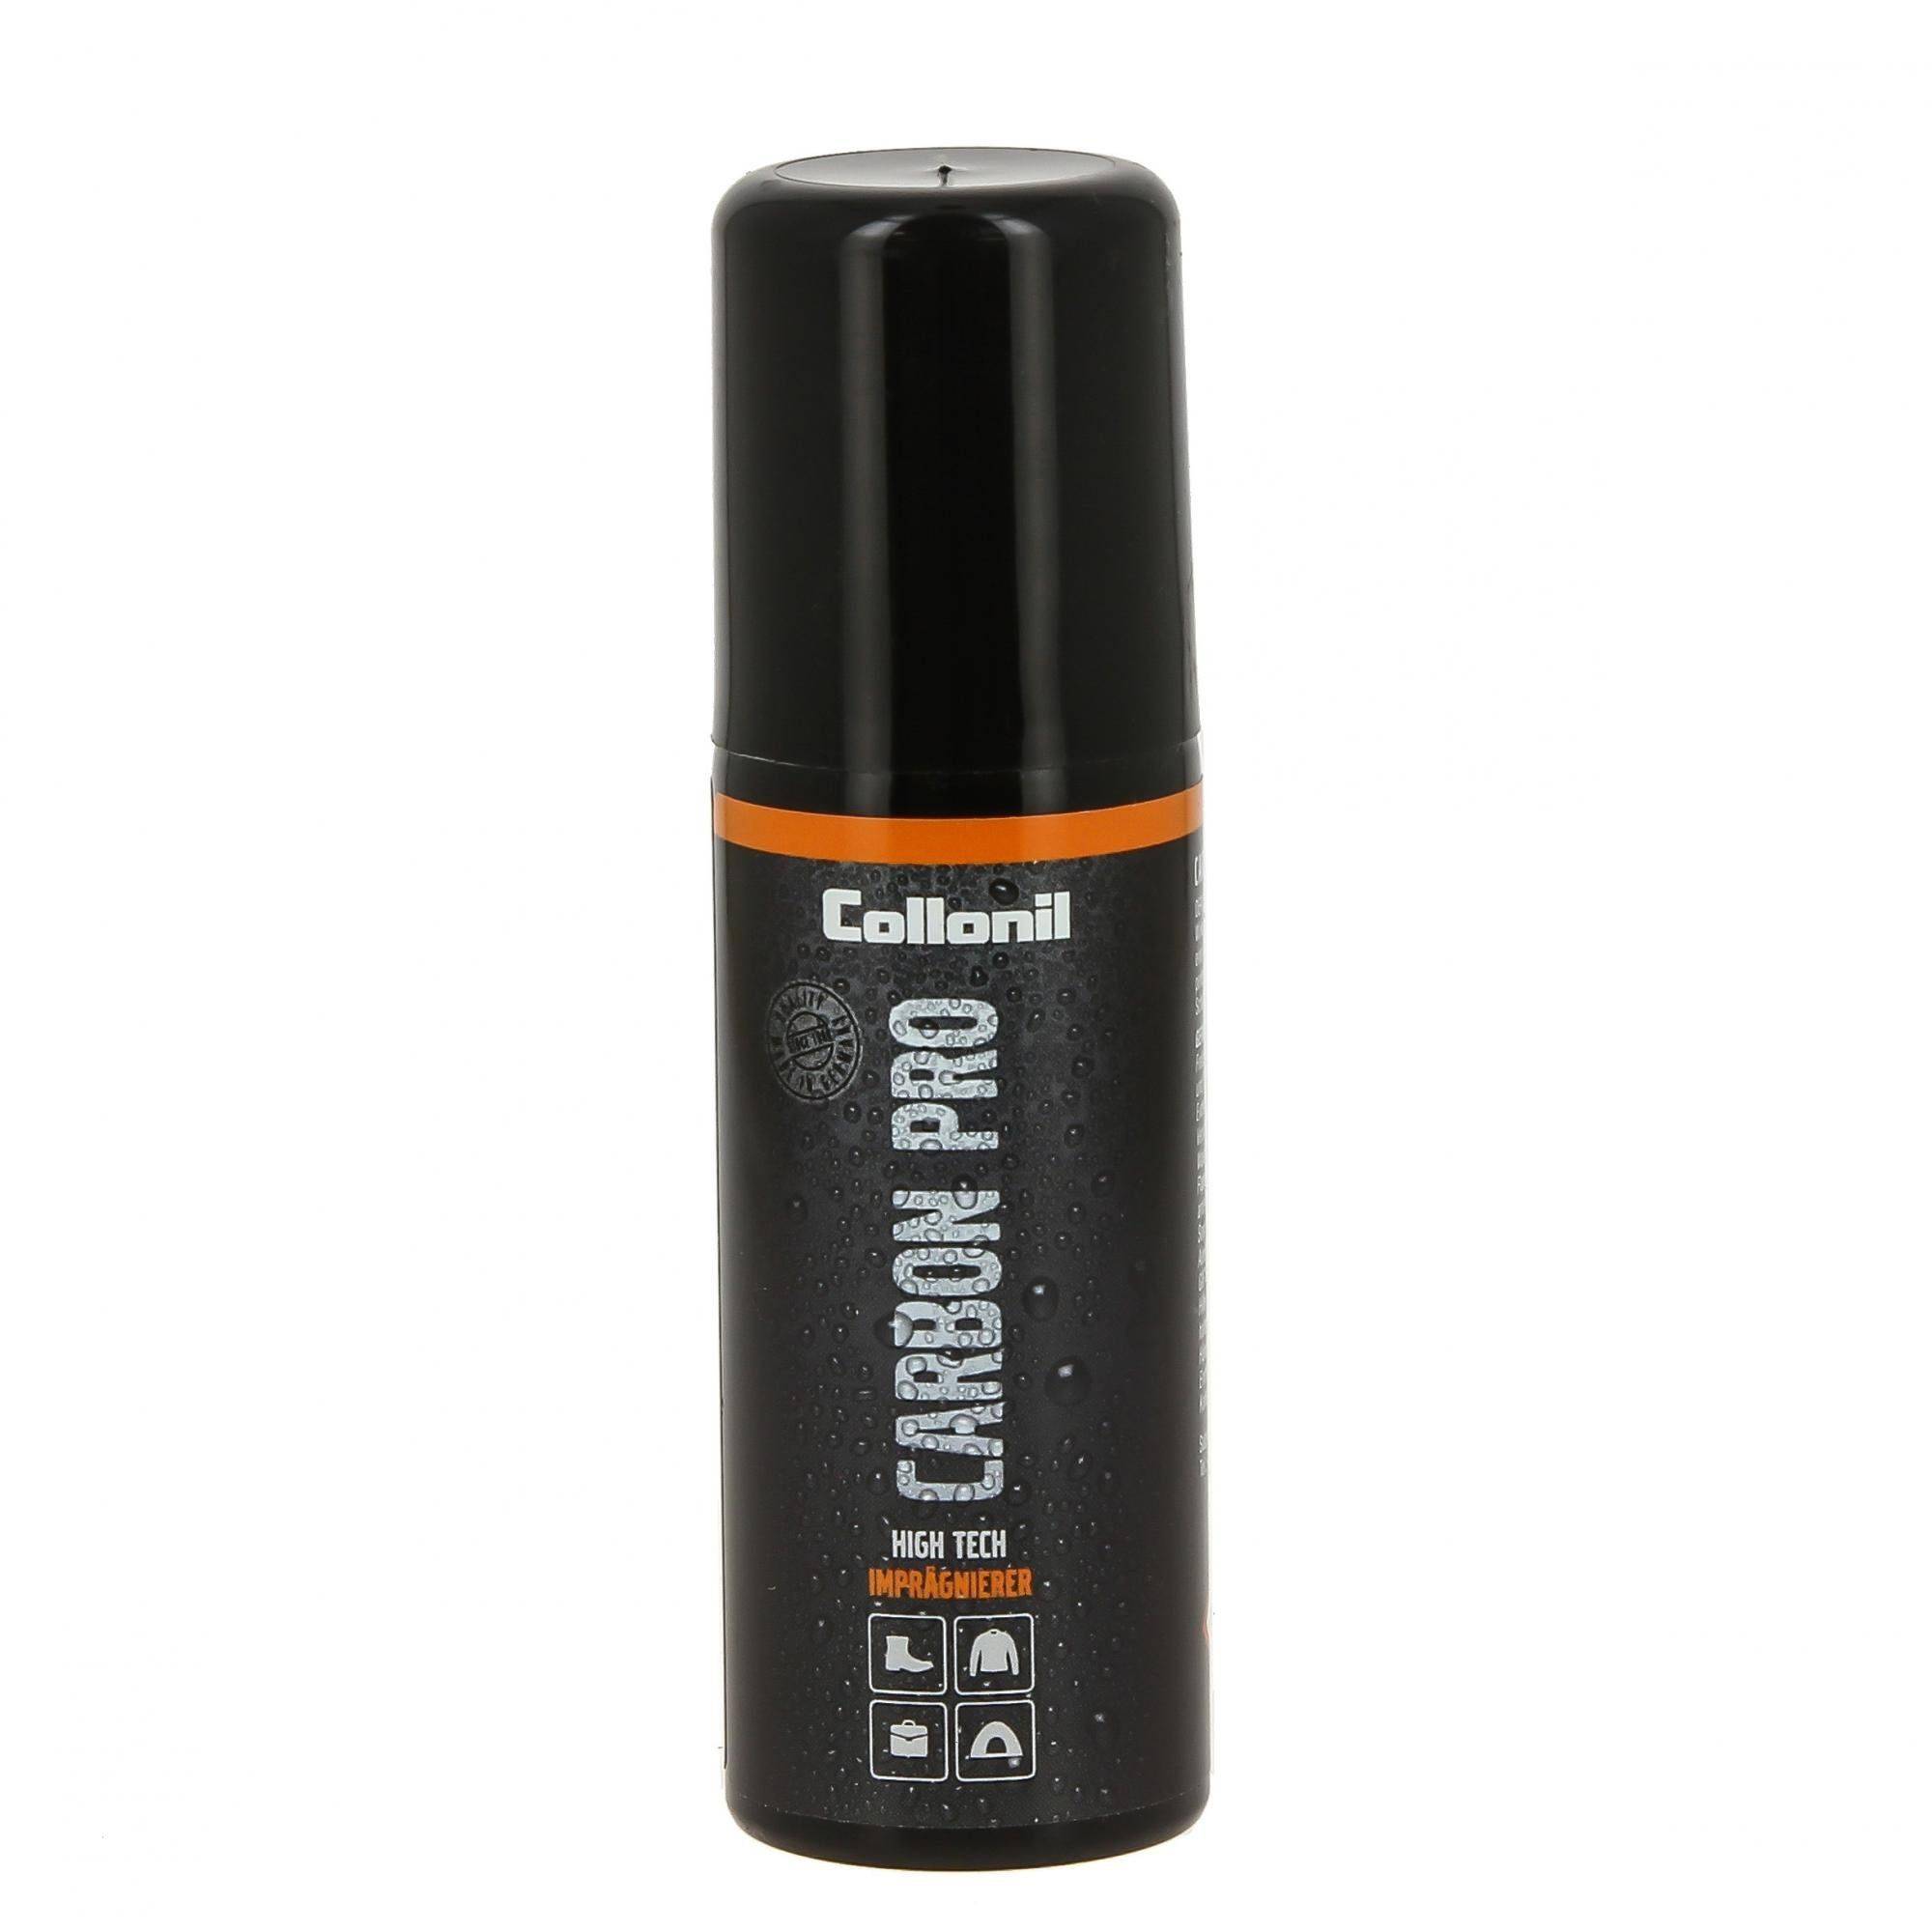 Протектор COLLONIL Carbon Pro 50 ml, влаго-и грязеотталкивающий спрей W100053, размер ONE SIZE